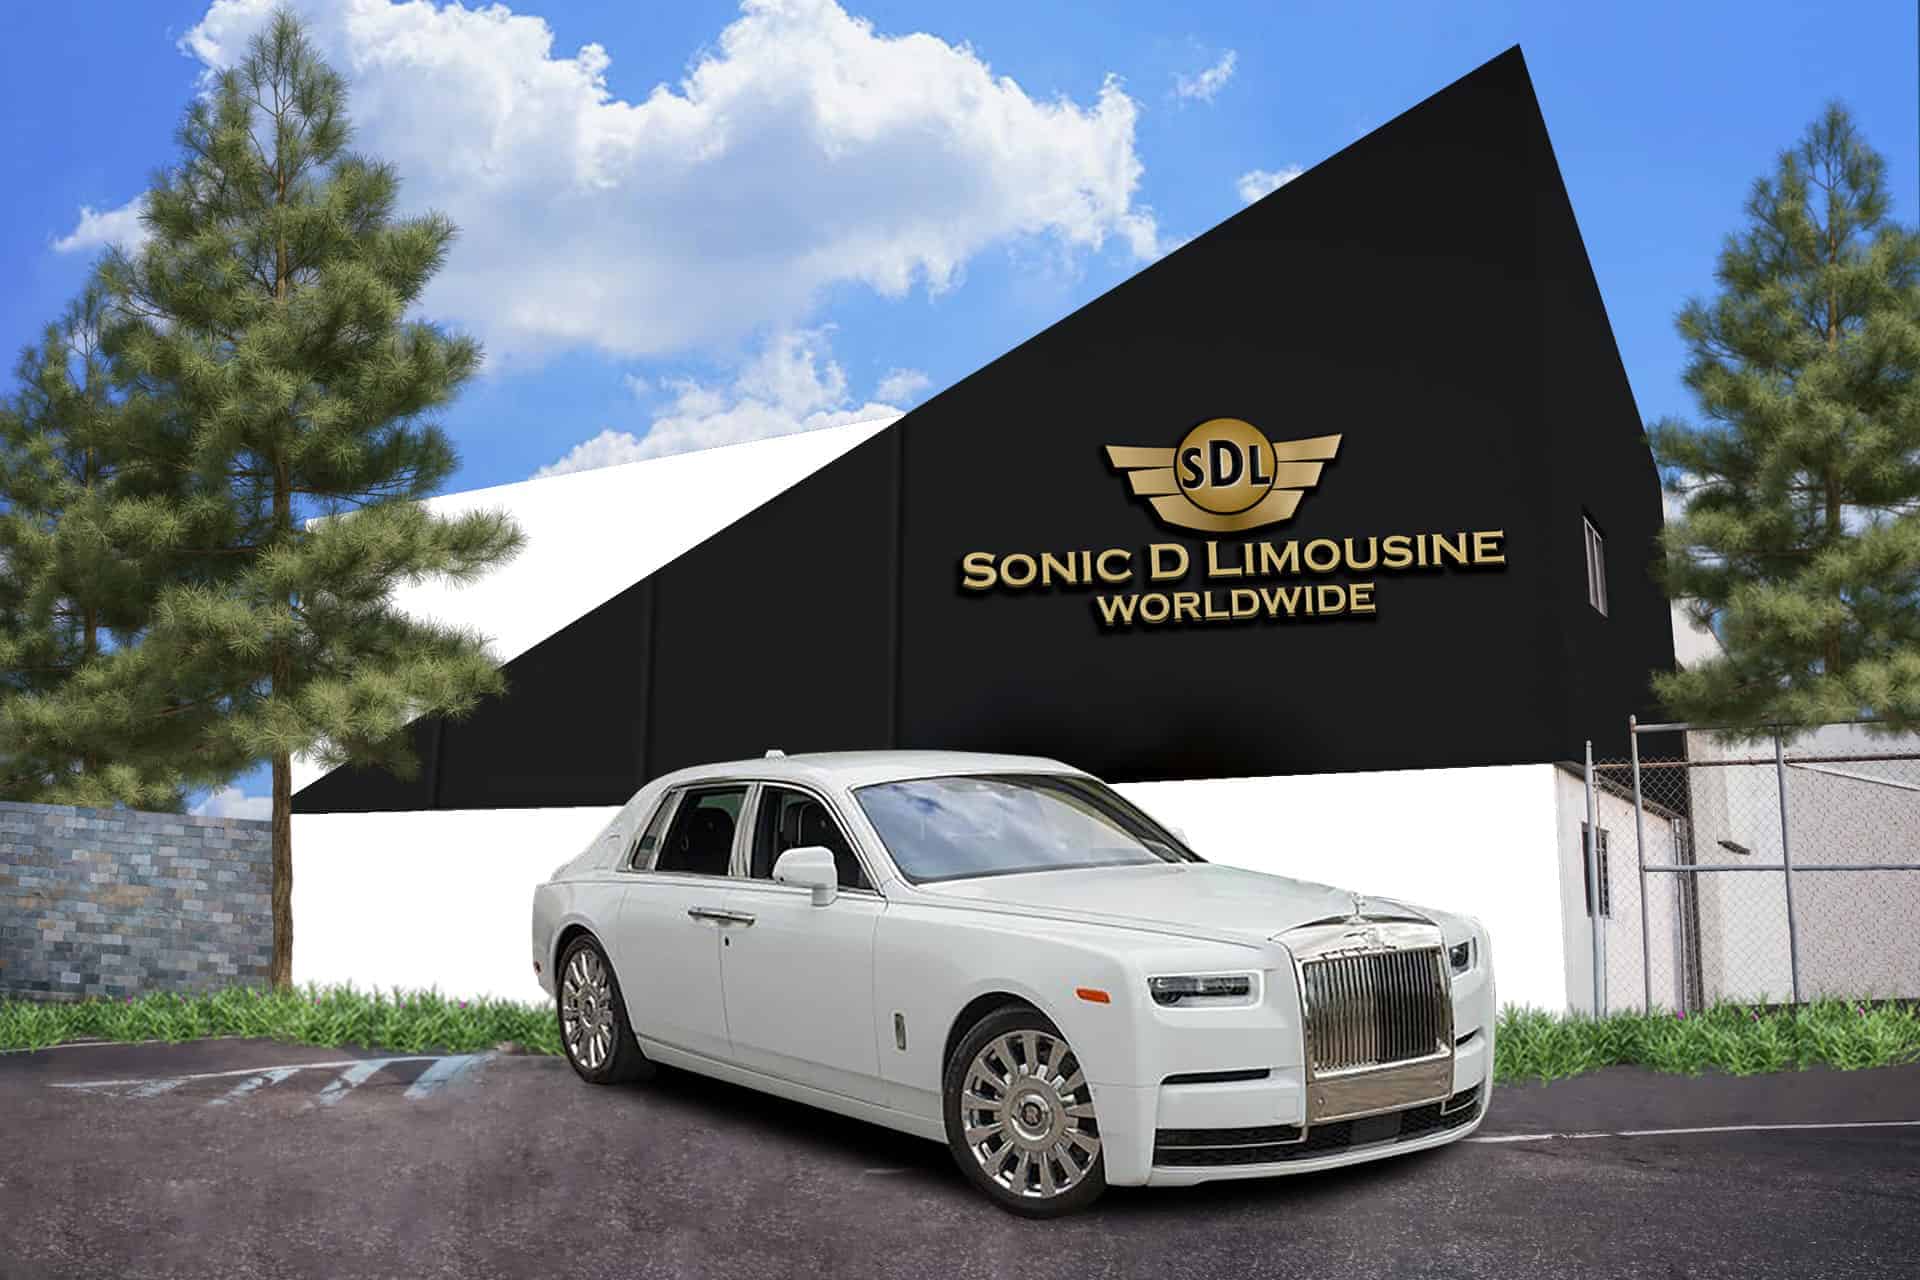 Rolls Royce Phanton with BG